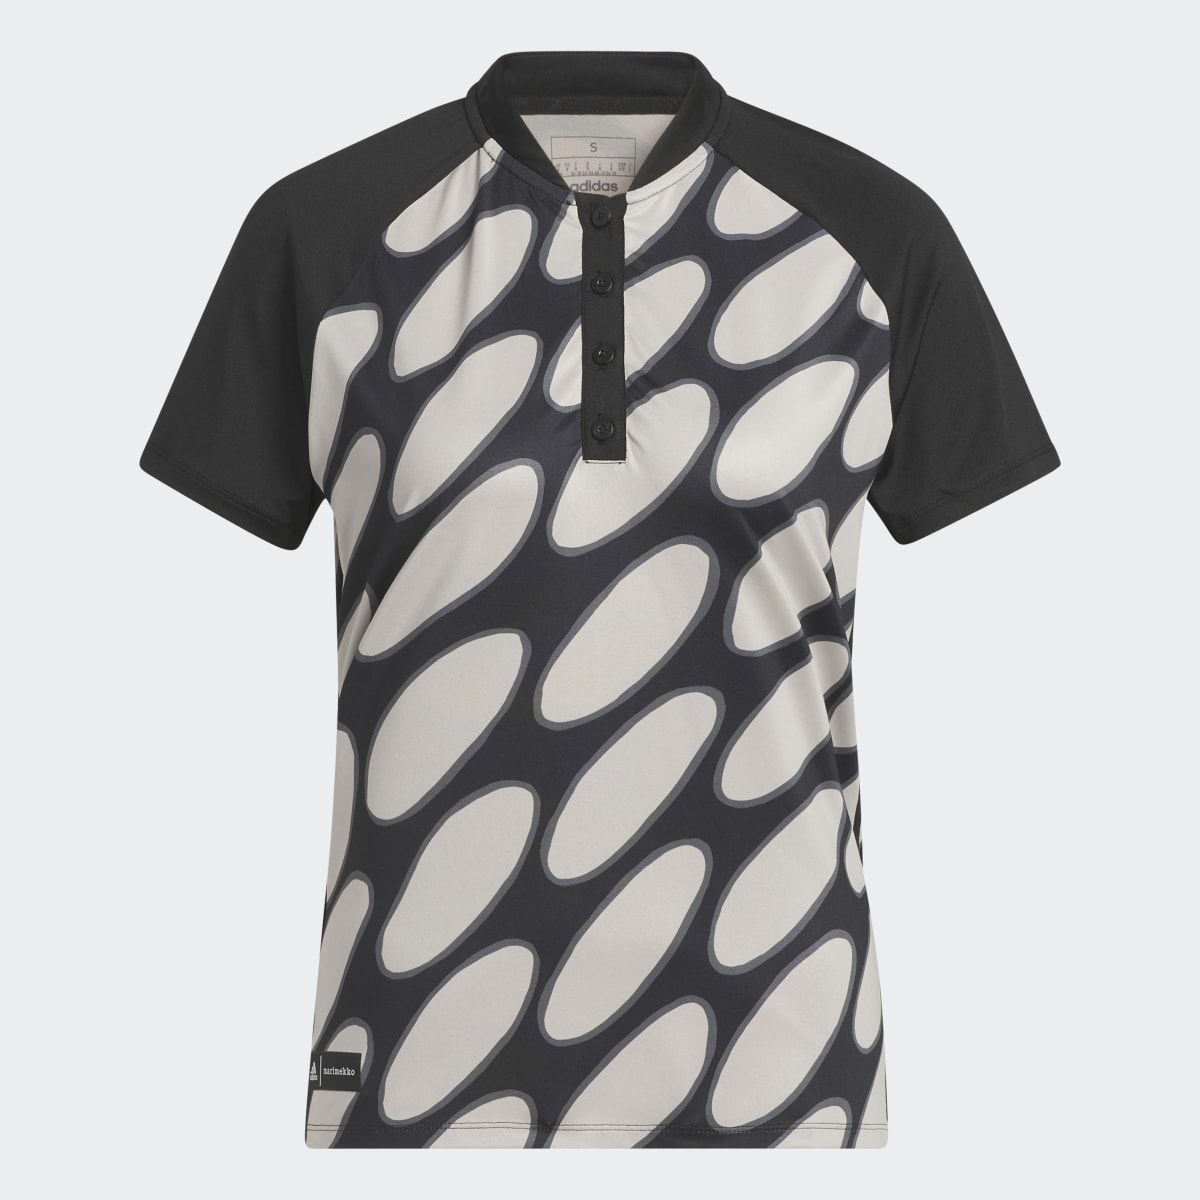 Adidas Marimekko Polo Shirt. 5